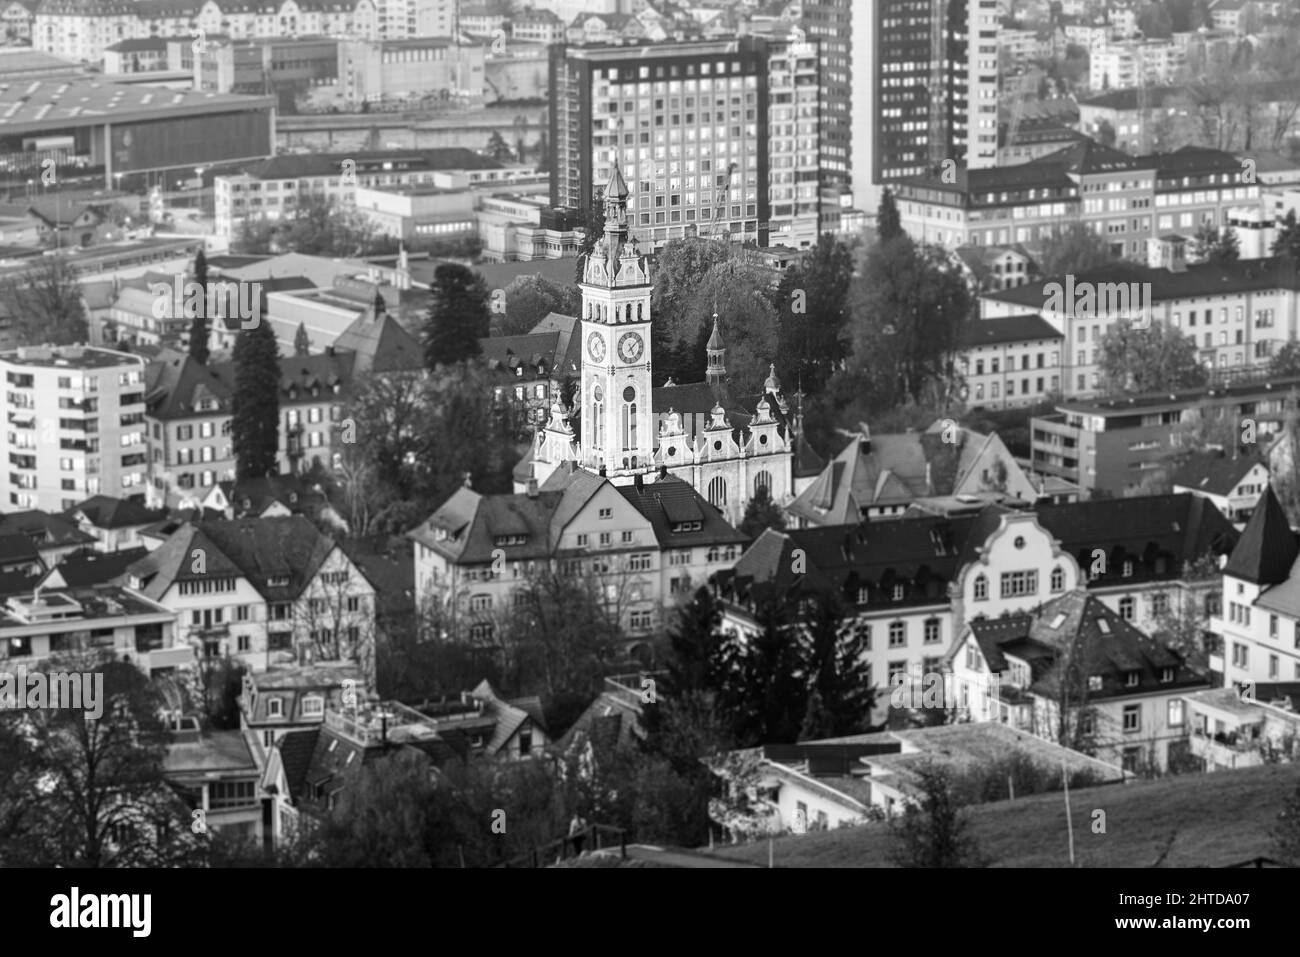 Aerial view of the Saint Gallen in Switzerland Stock Photo